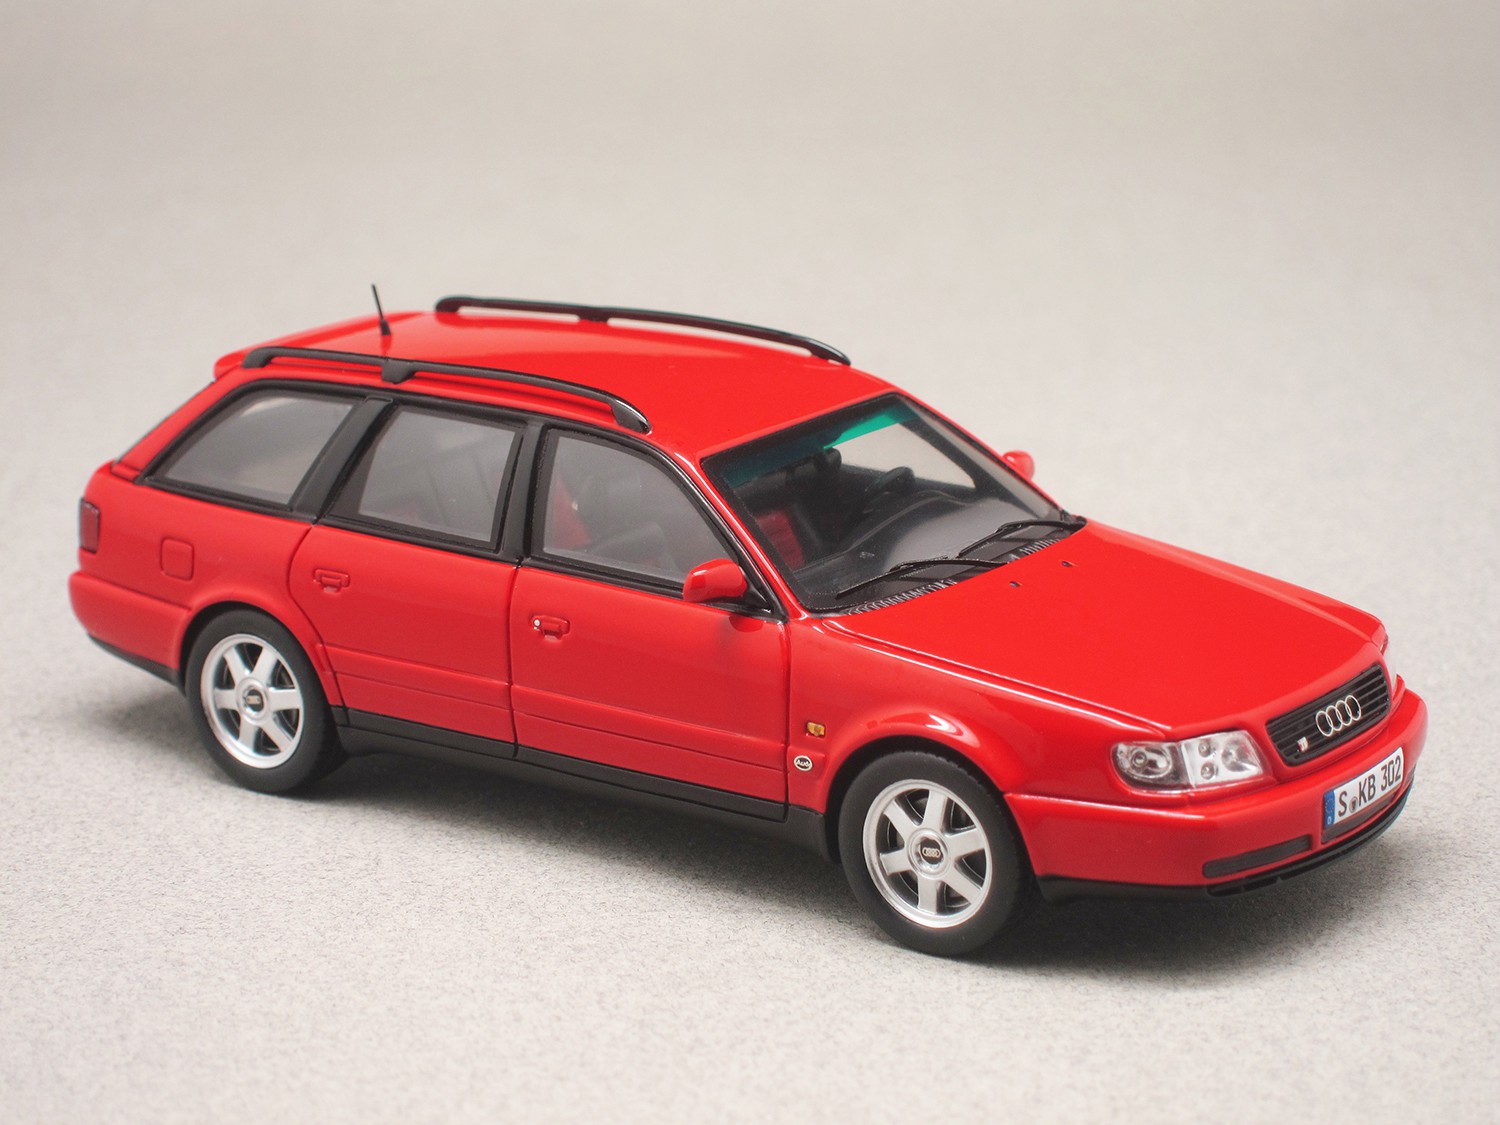 Audi S6 Avant 1994 (Spark) 1:43 - Minicarweb